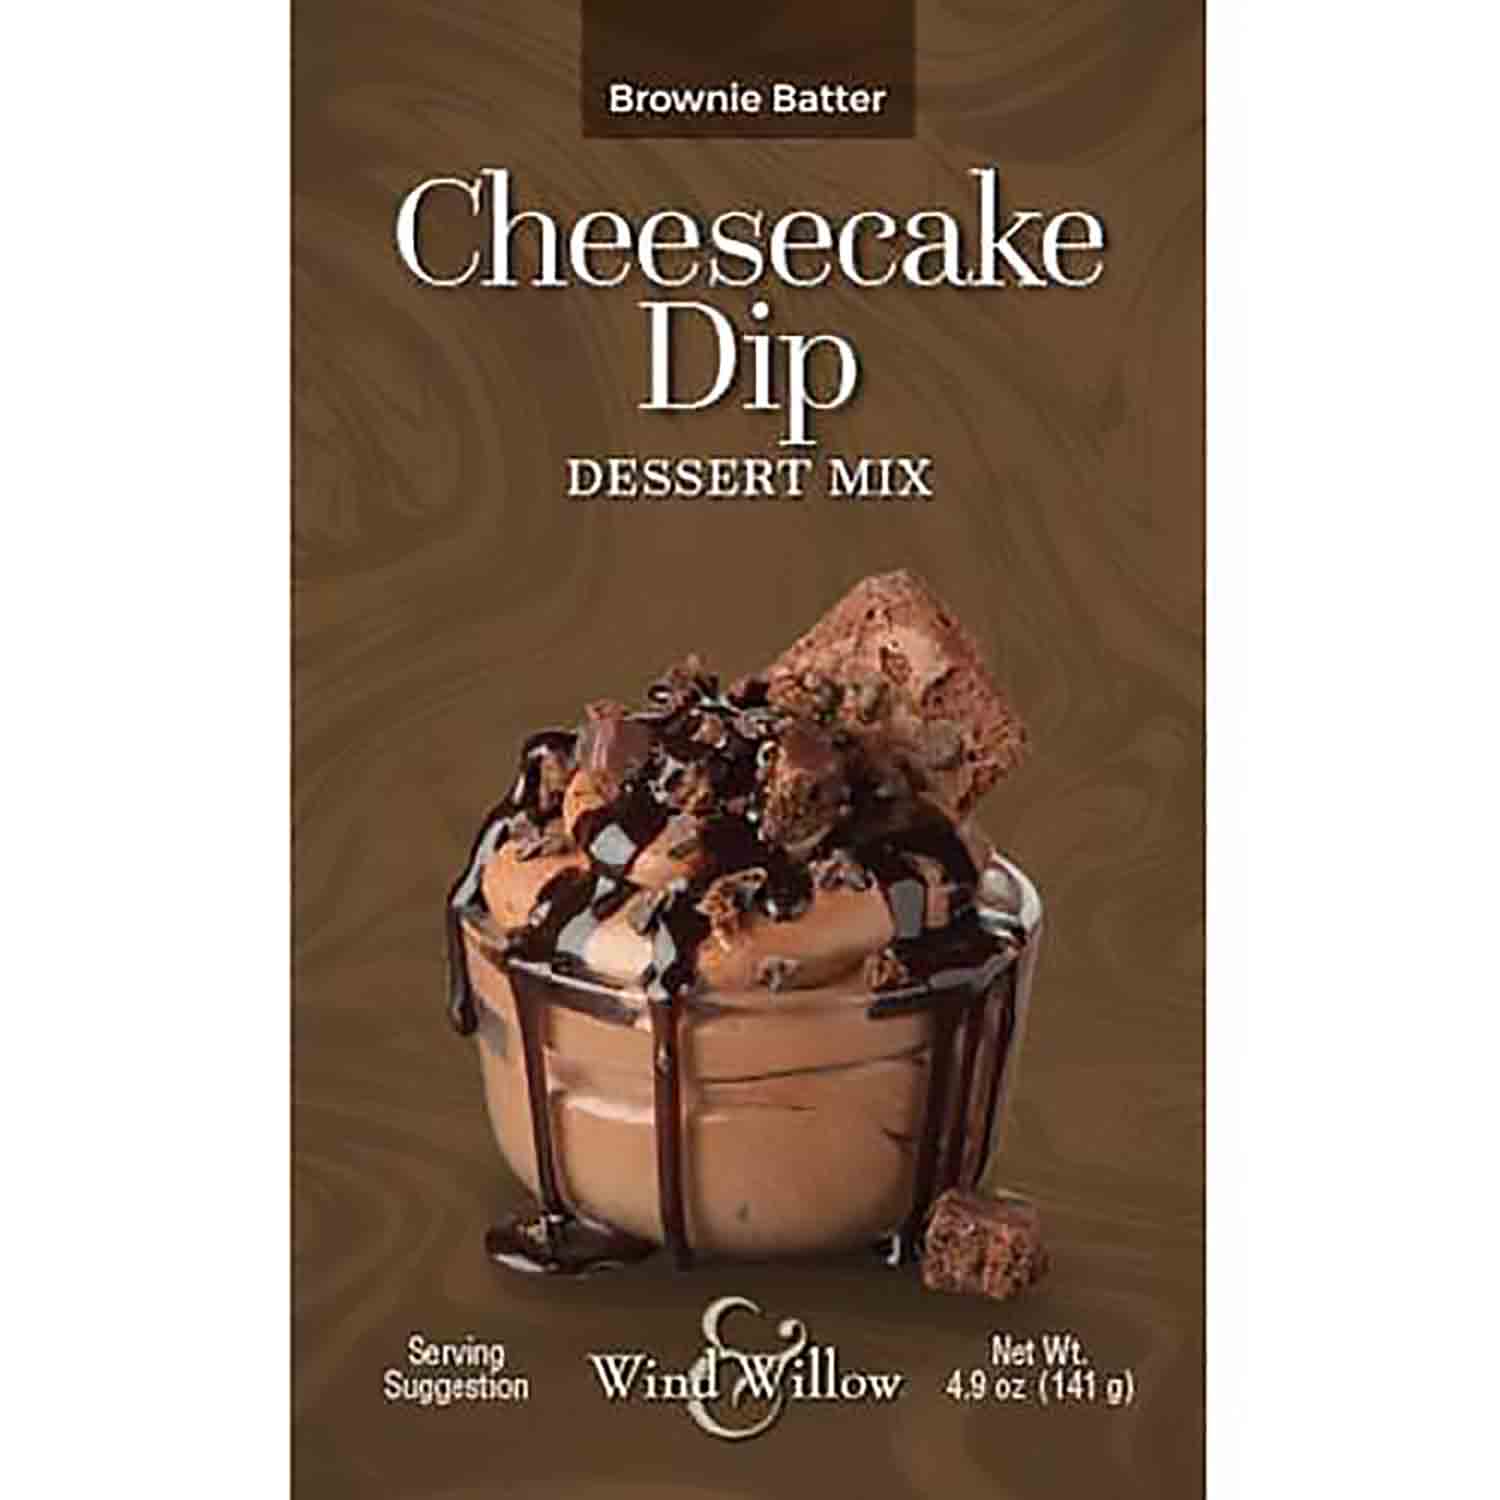 Brownie Batter Cheesecake Dip Mix